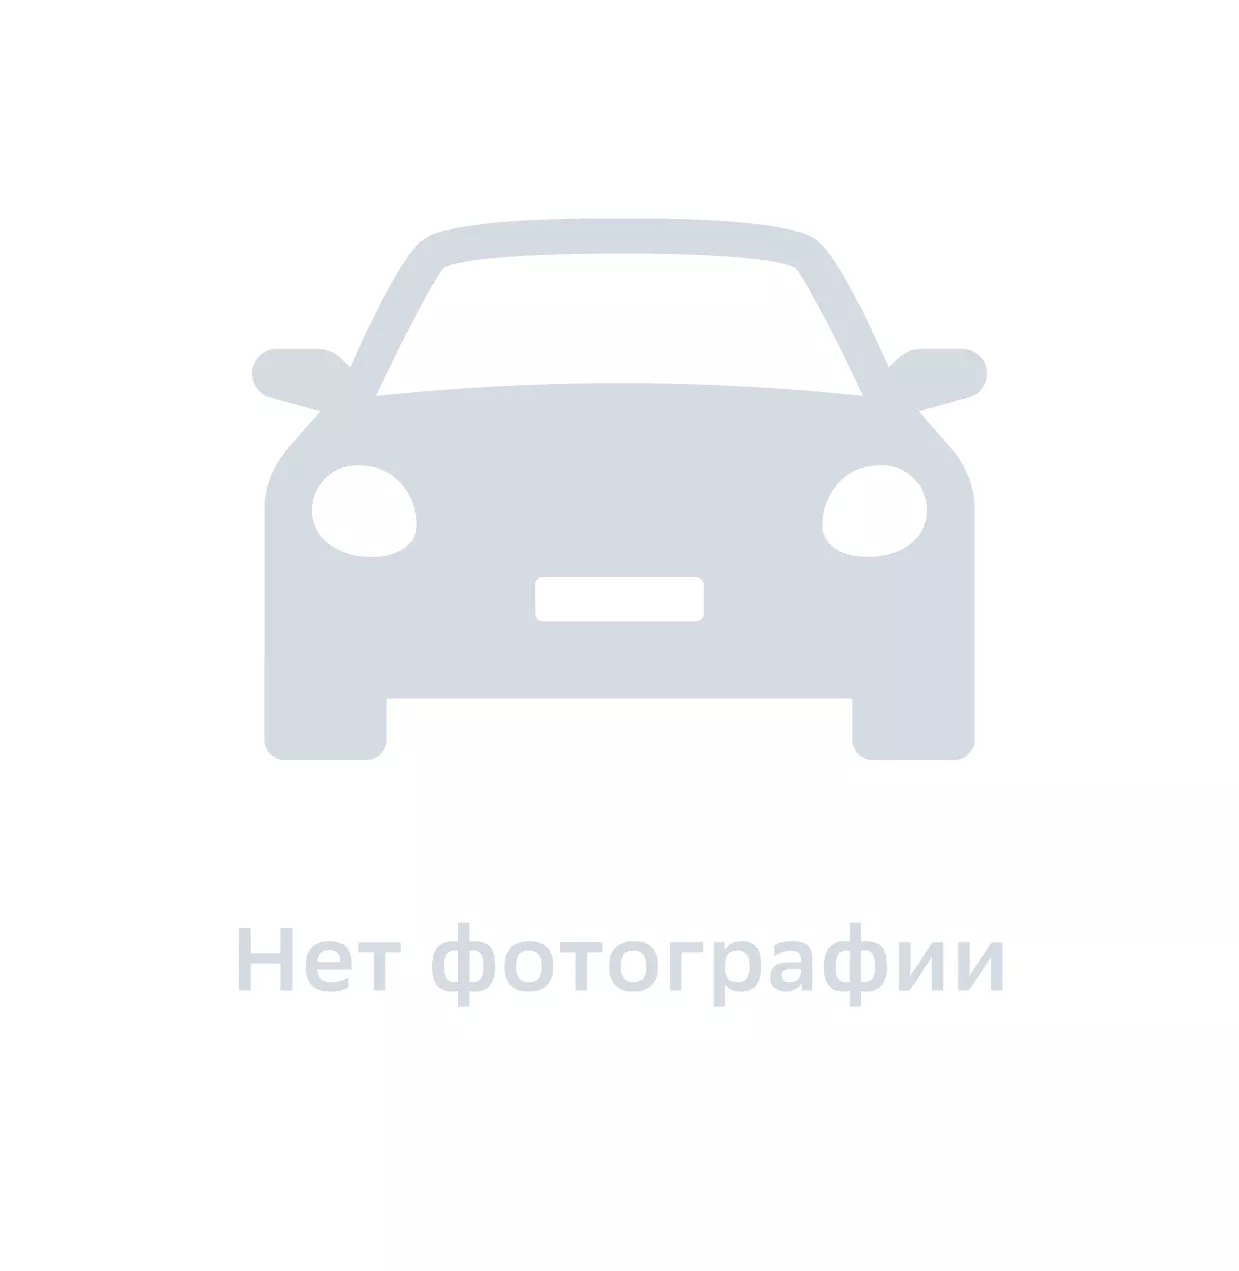 Насос масляный, Hyundai-KIA, арт. 2131026650, цена за 1 шт.